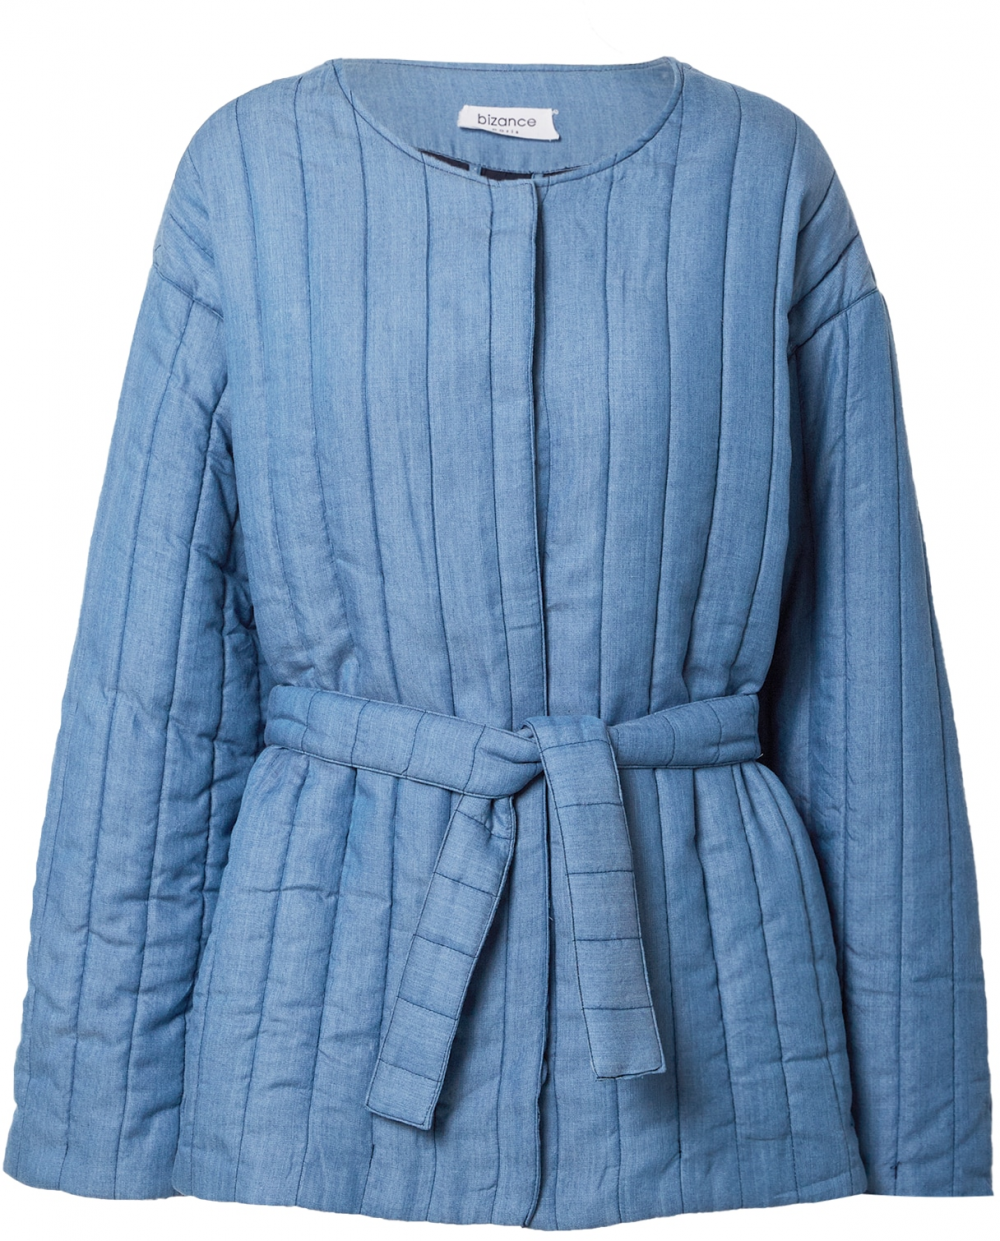 Bizance Paris Átmeneti kabátok 'Cala'  kék